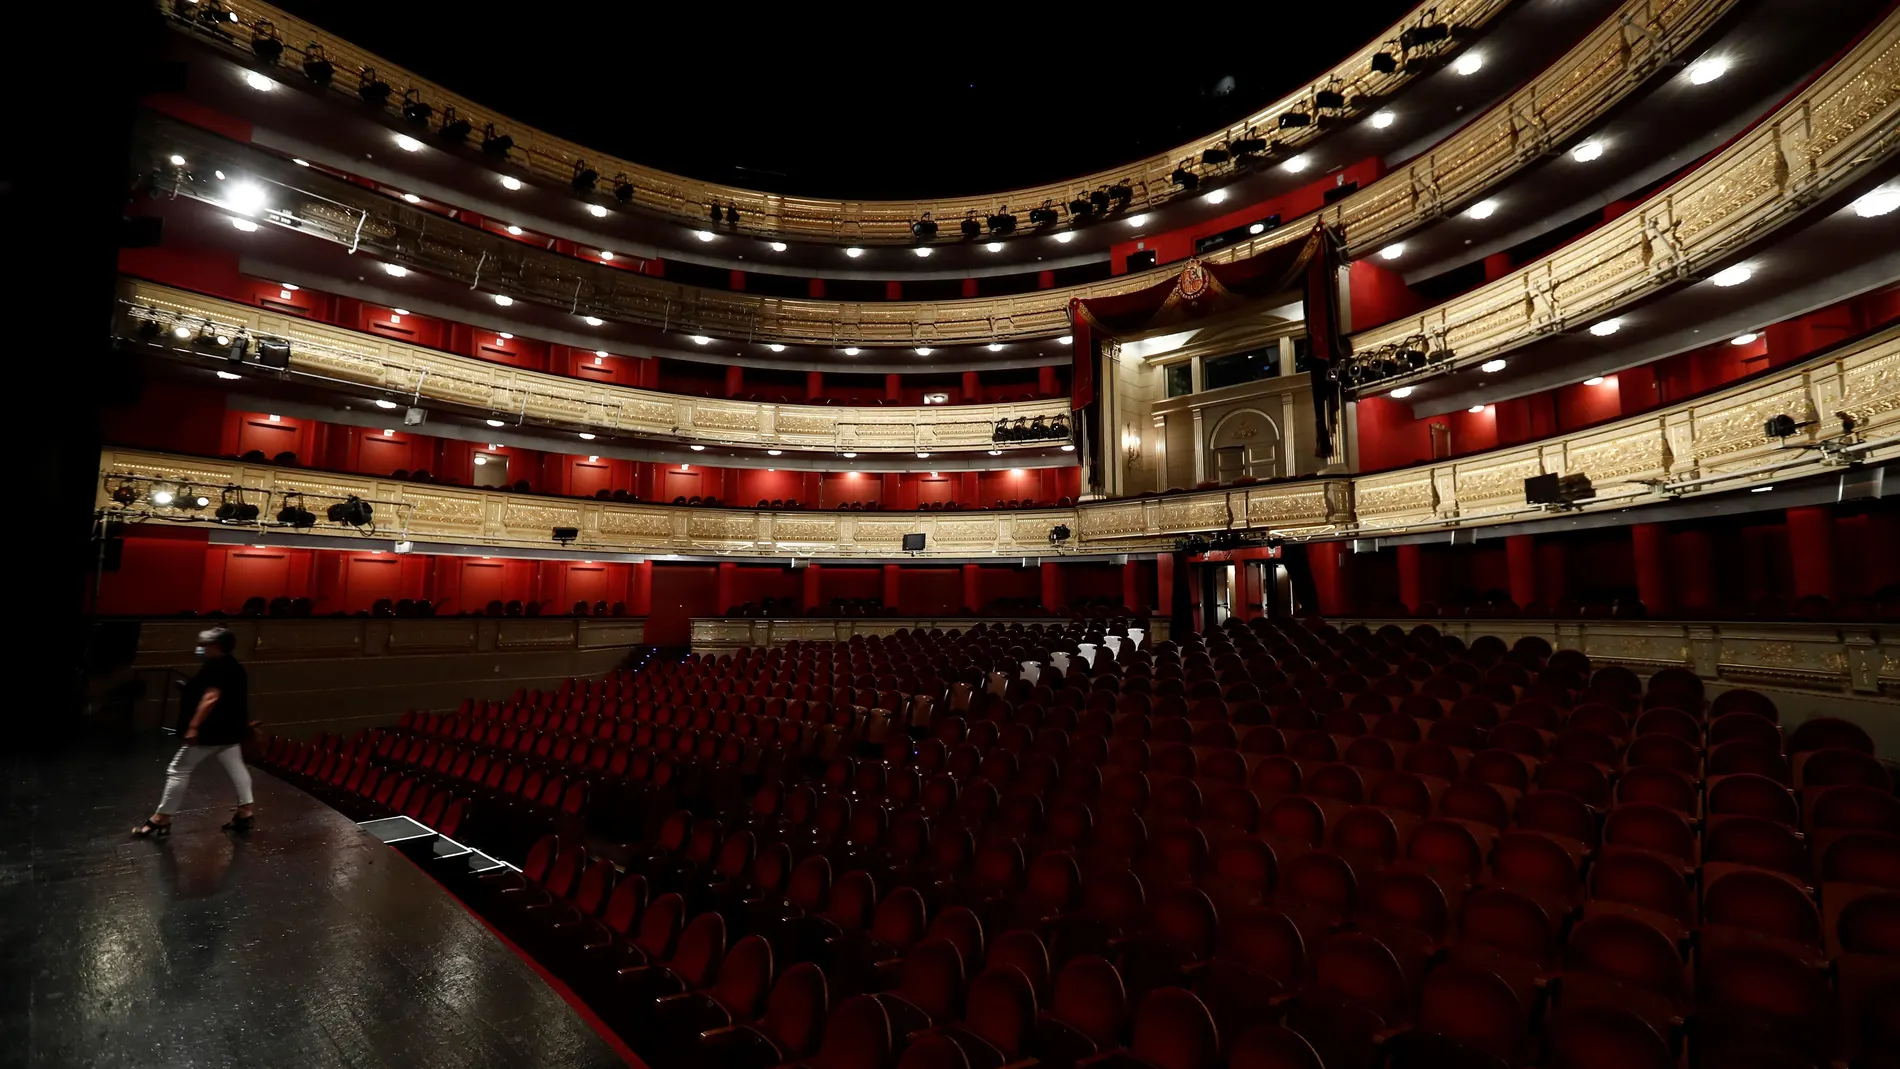 Vista del interior del Teatro Real